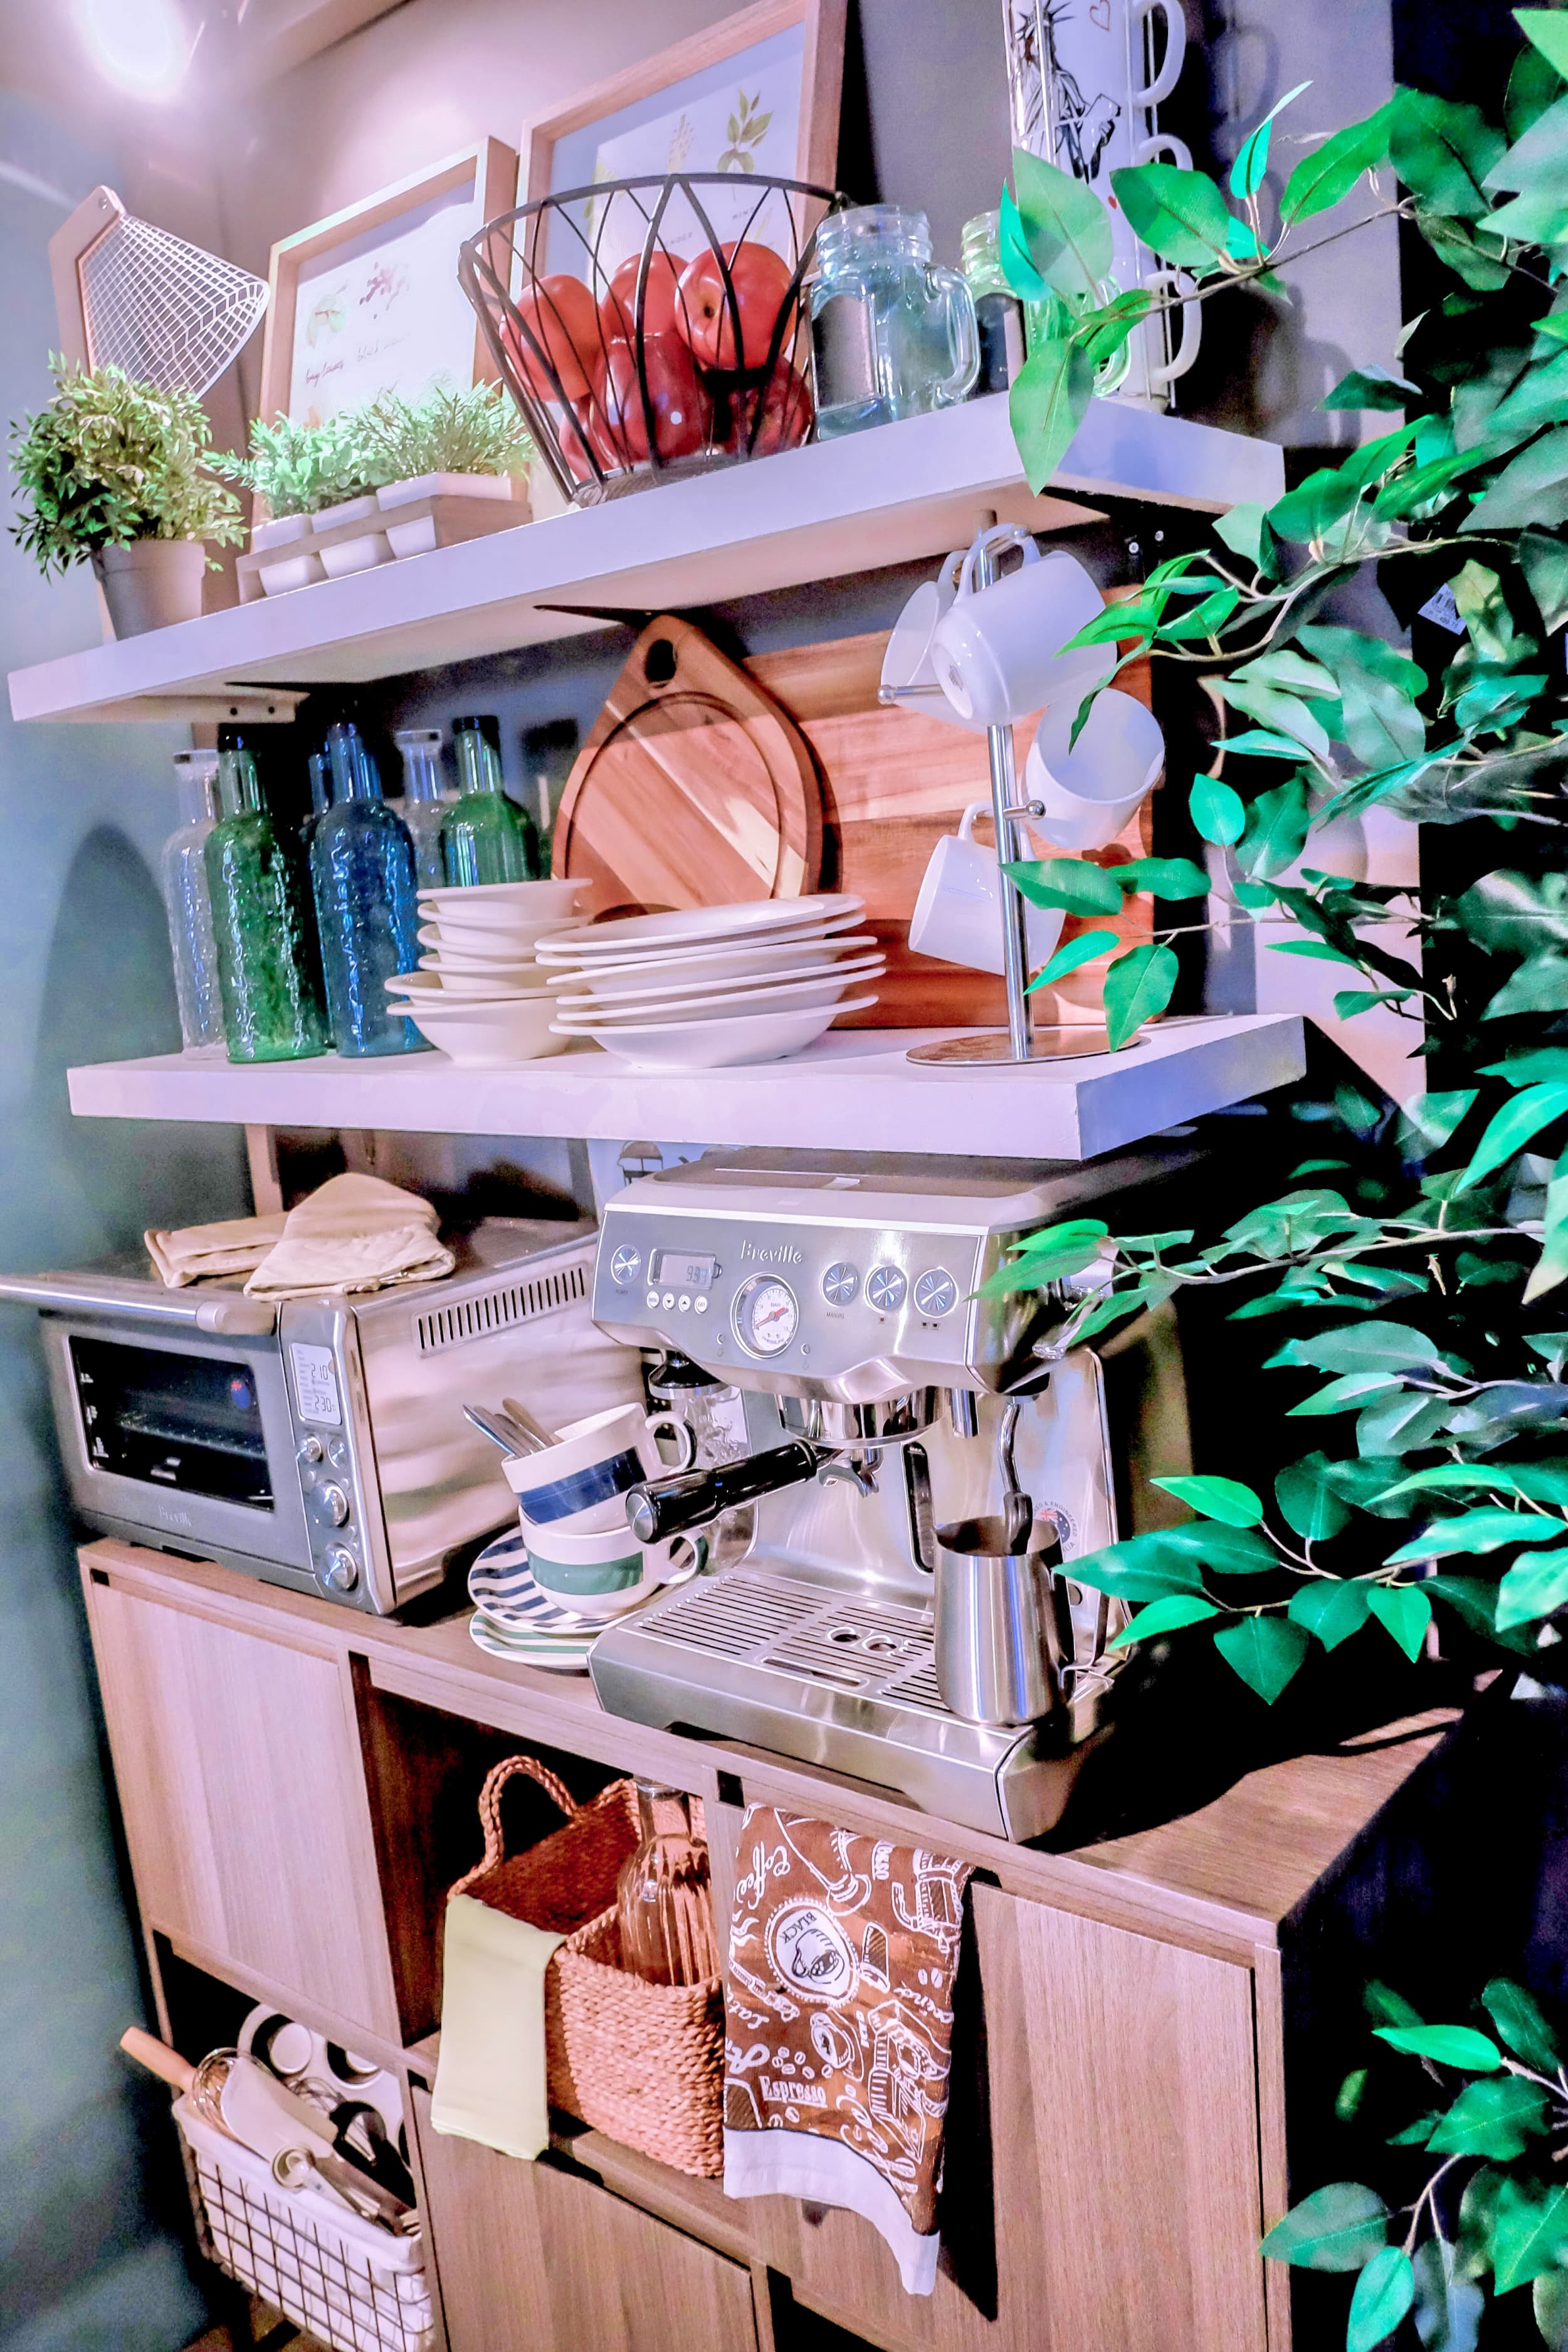 Kitchen by Janet Lo-Lee